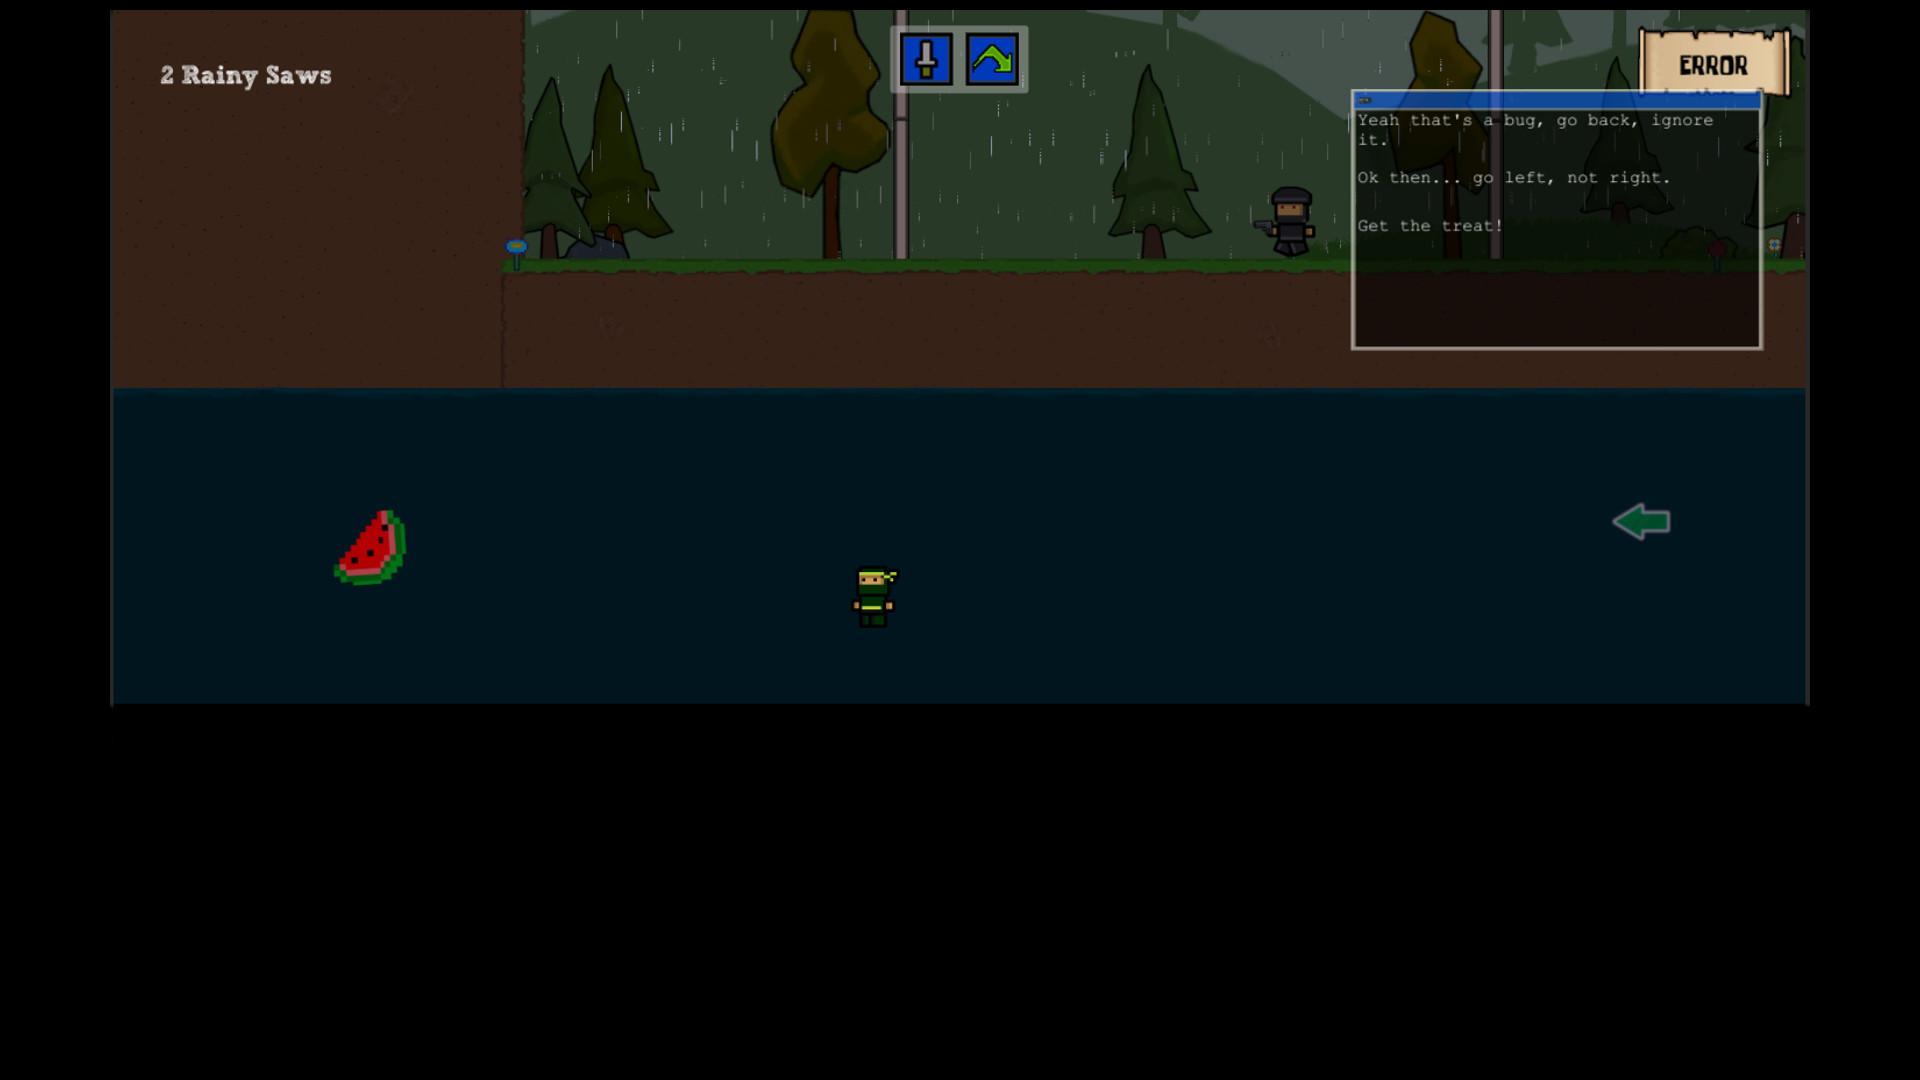 Screenshot №7 from game Save the Ninja Clan